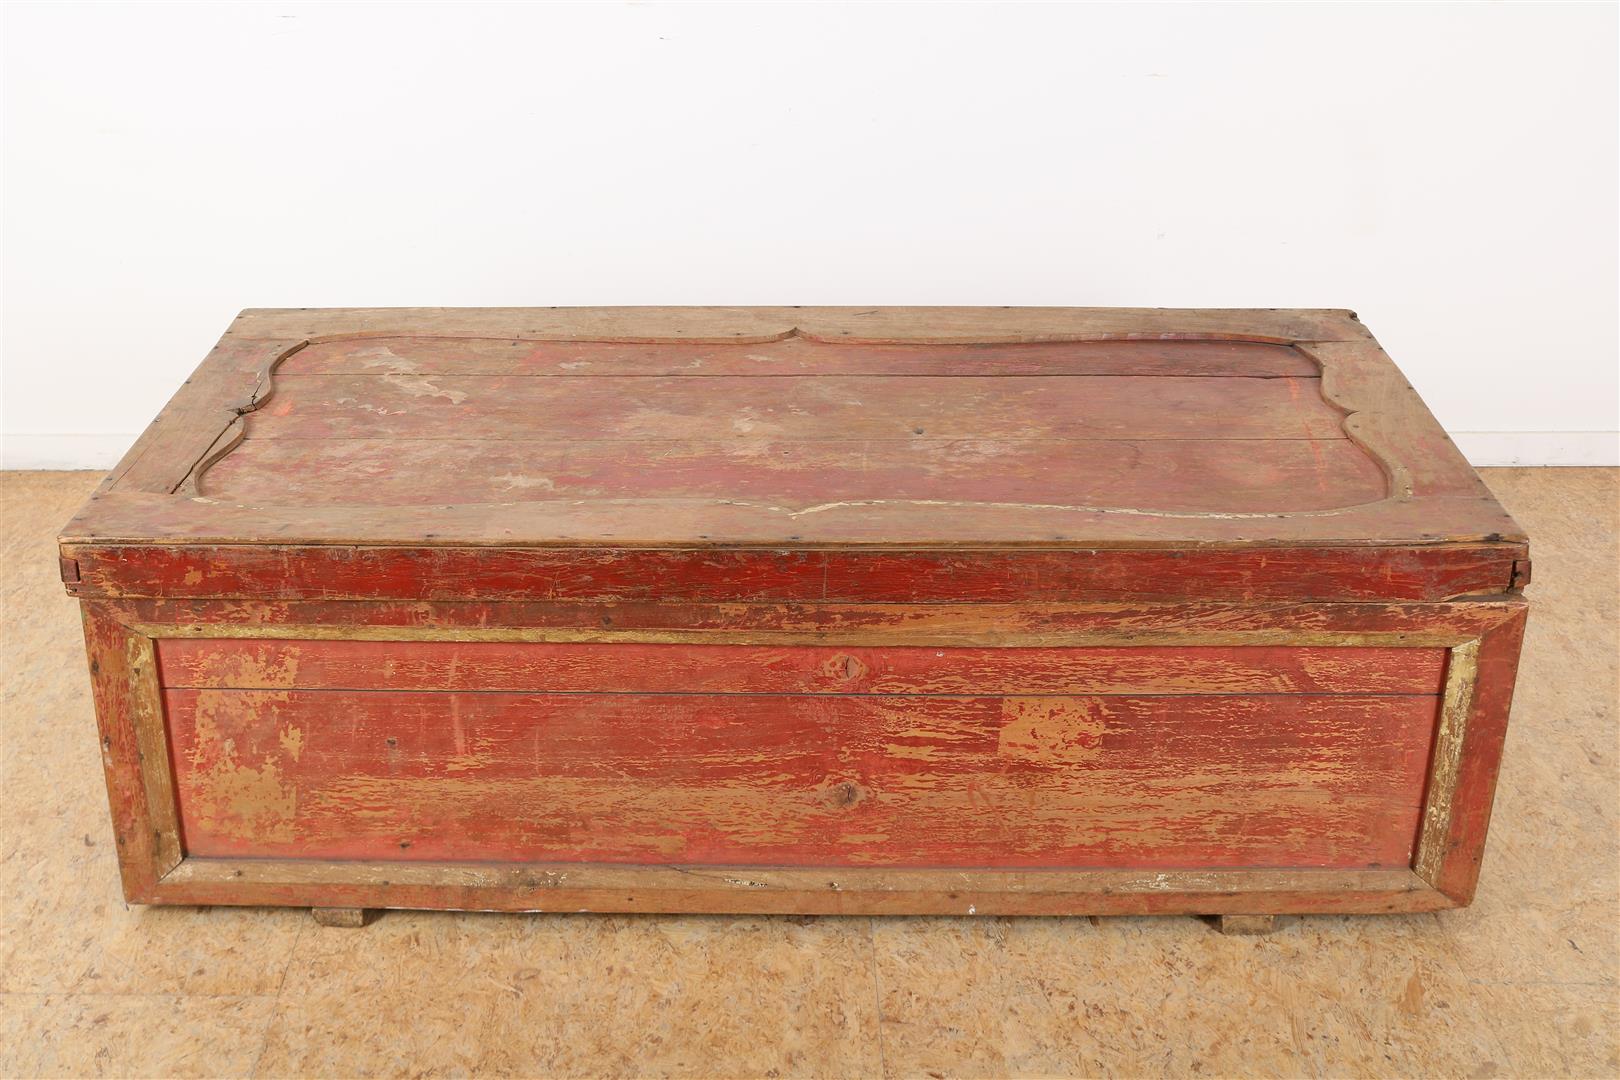 Red-painted elm wood bride's box 